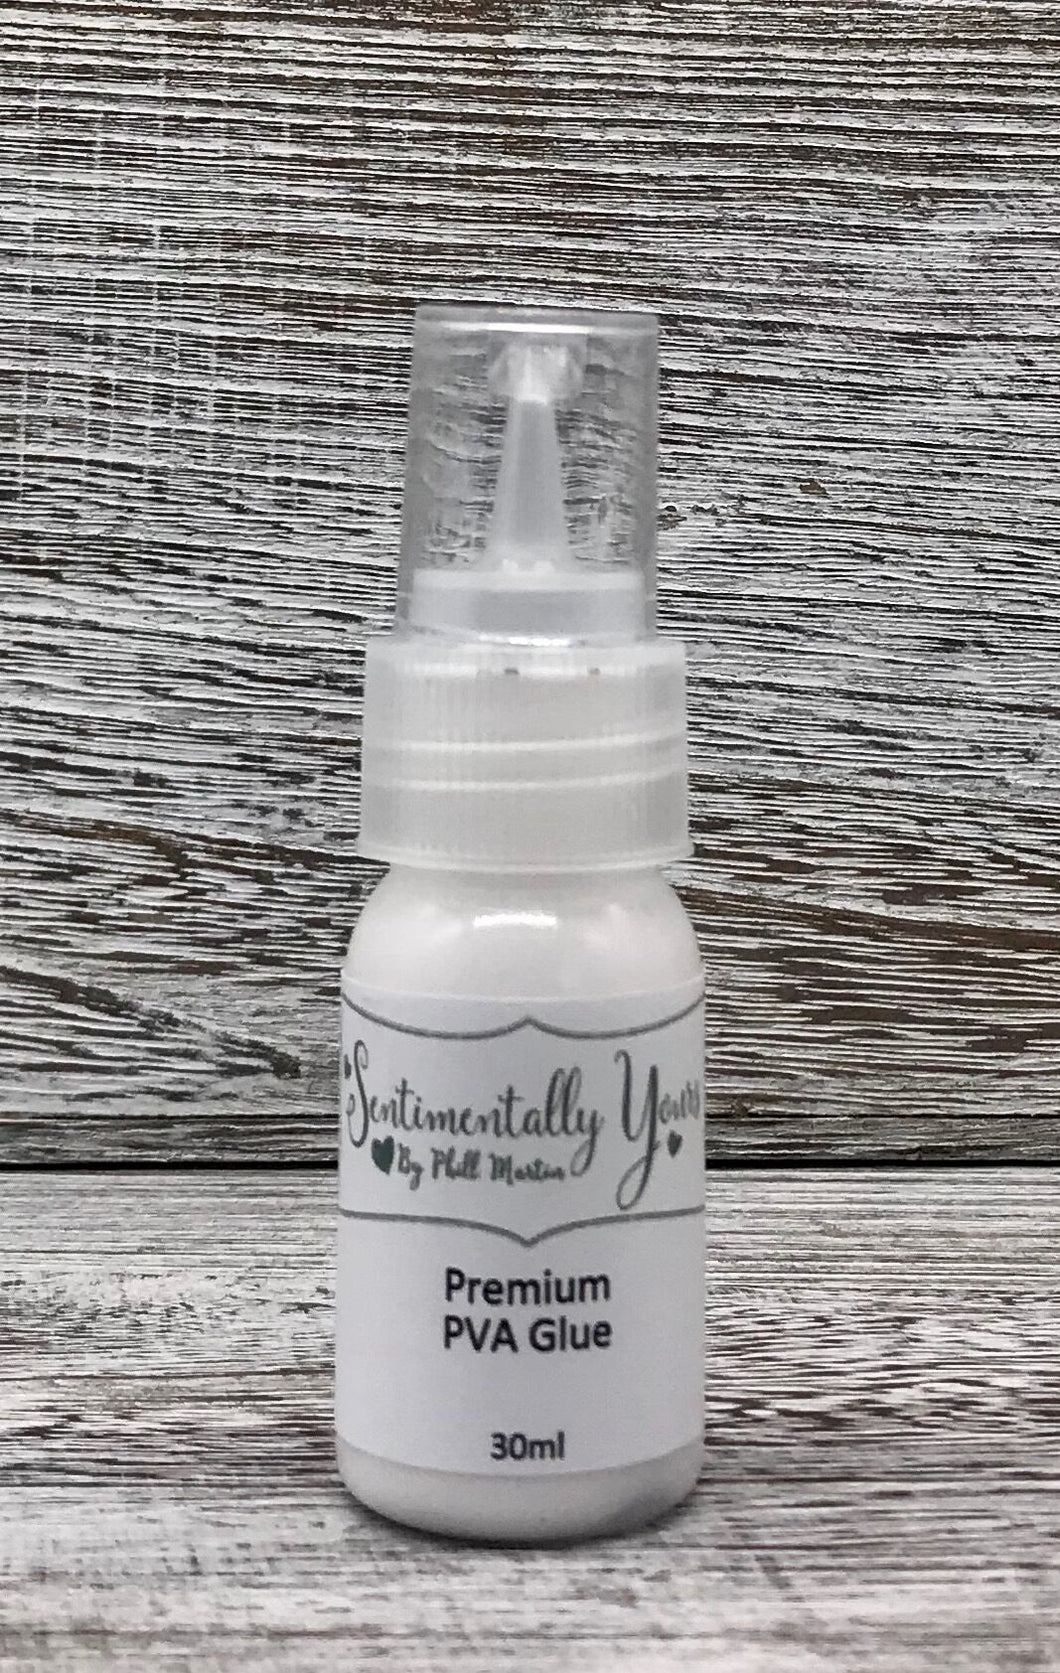 Sentimentally Yours Premium PVA Glue - 30ml